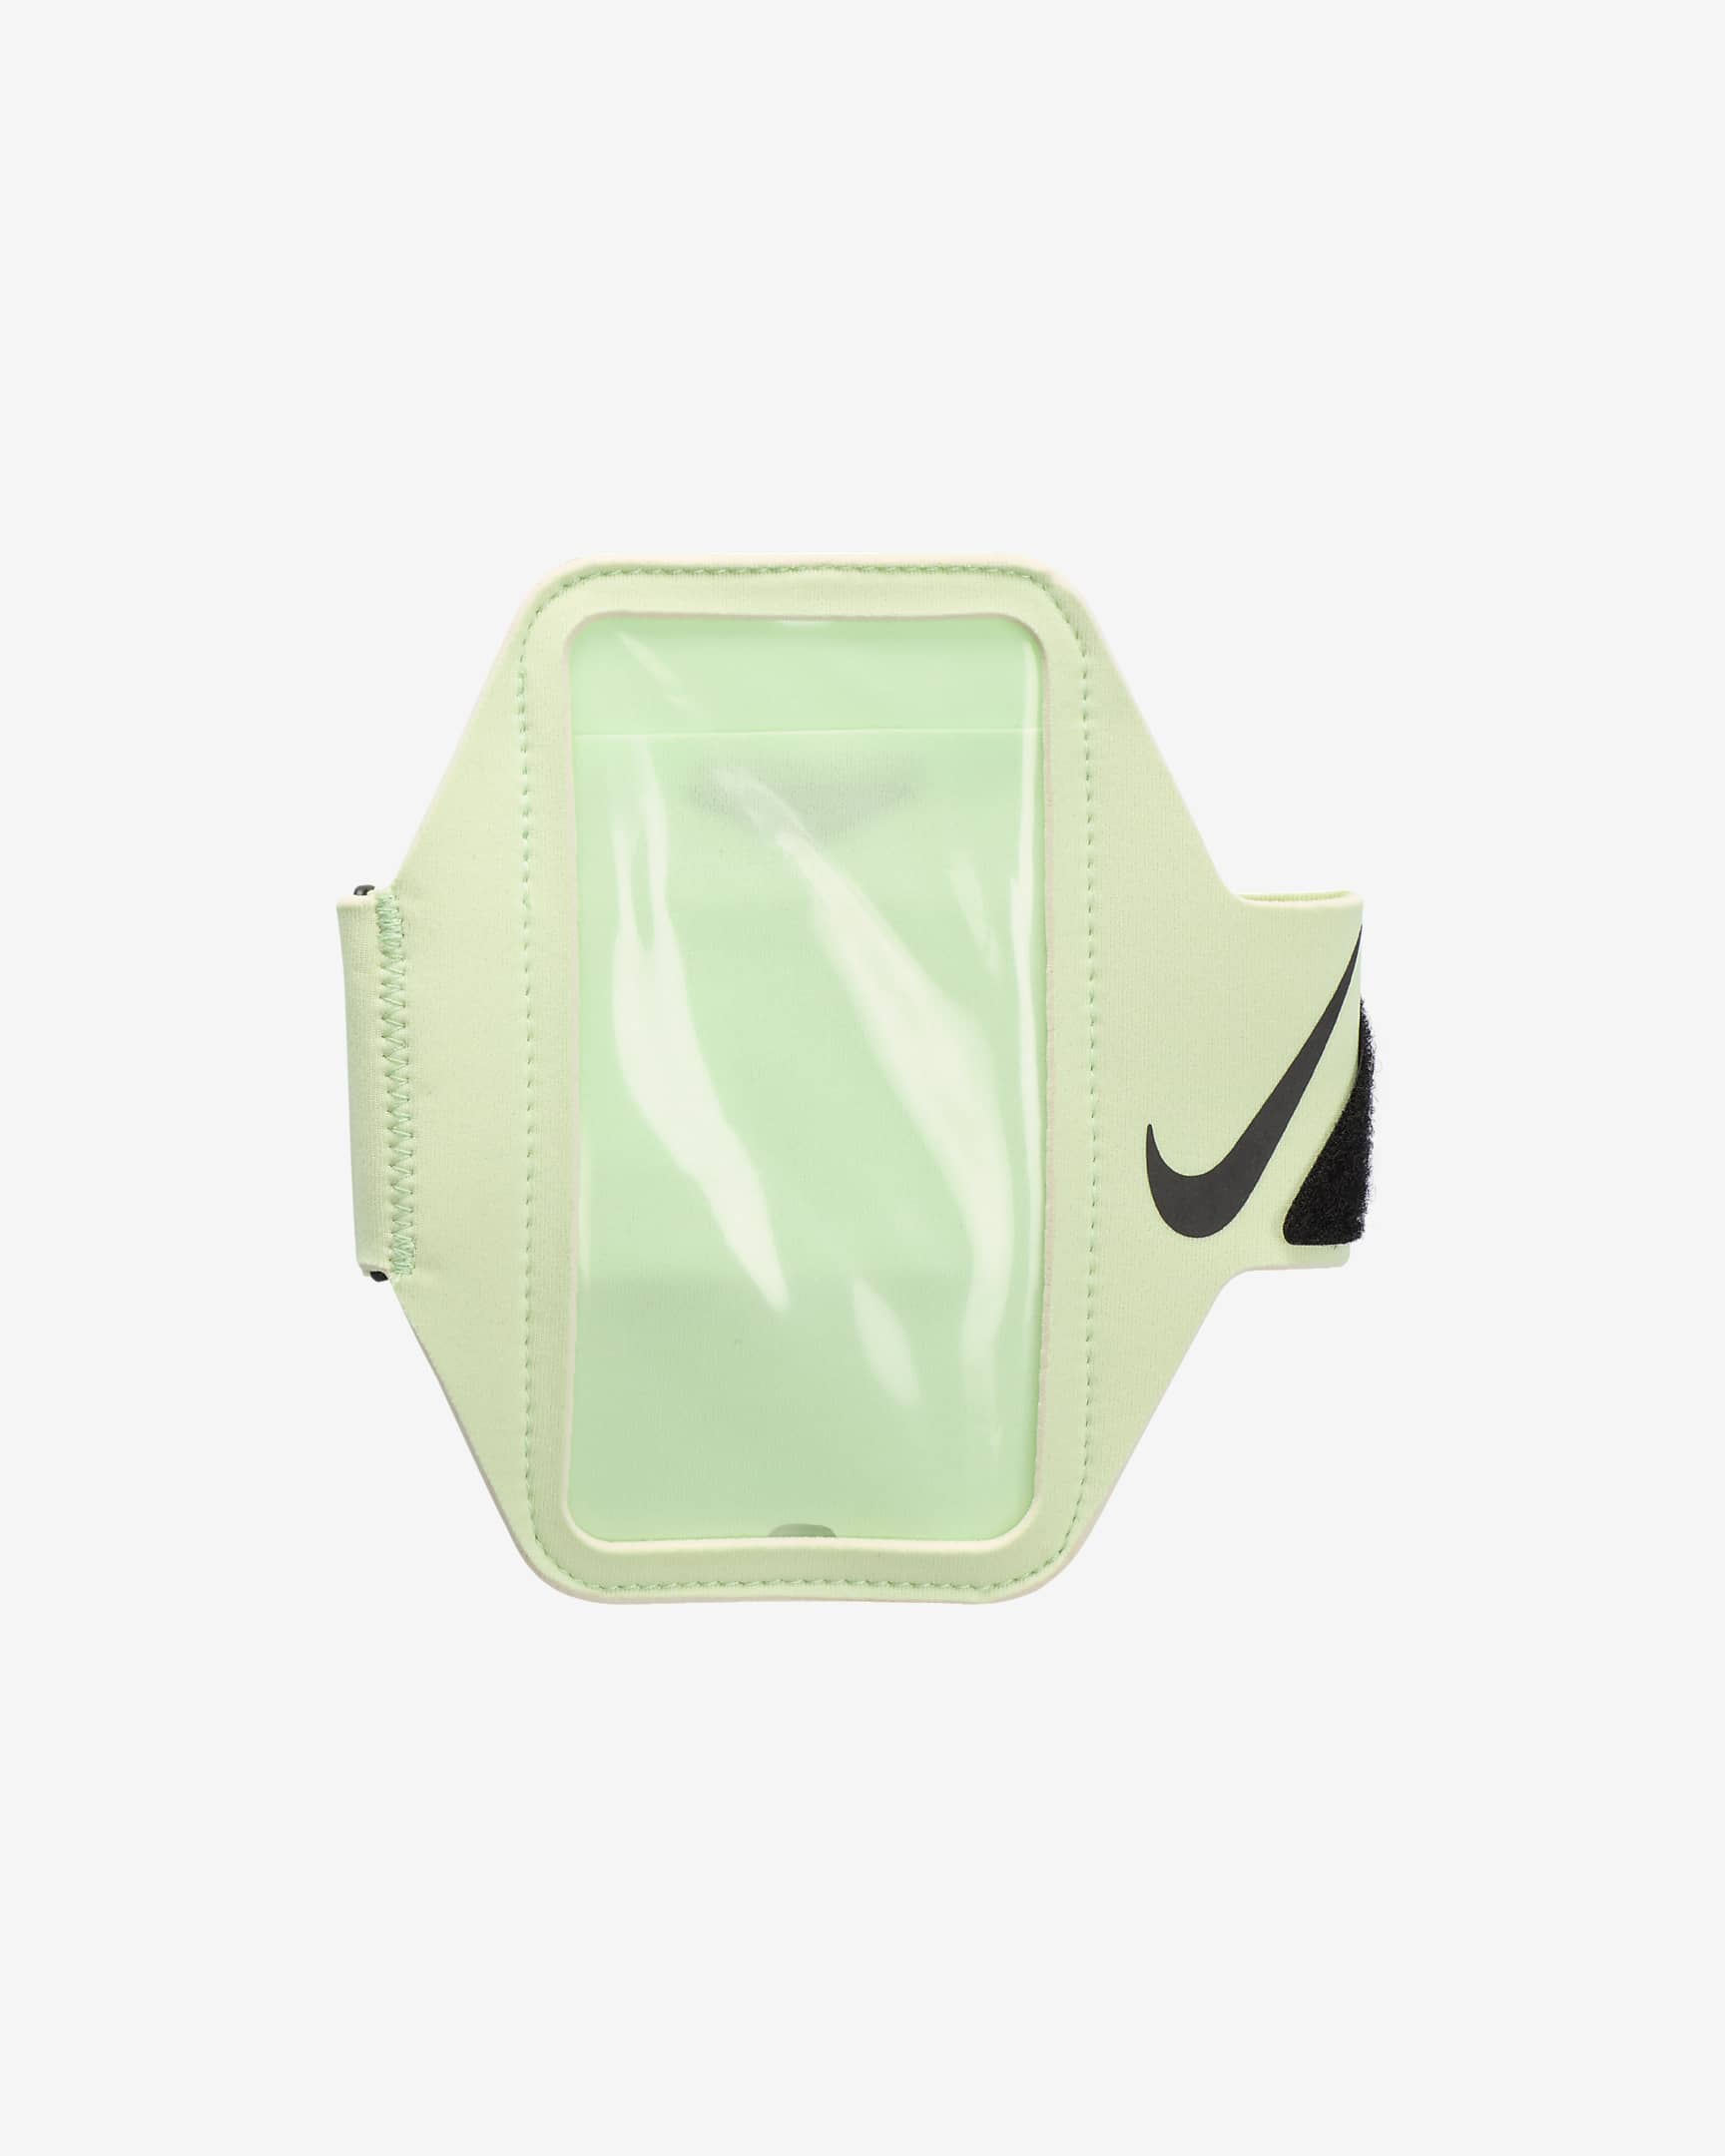 Brassard Nike Lean - Vapor Green/Noir/Noir